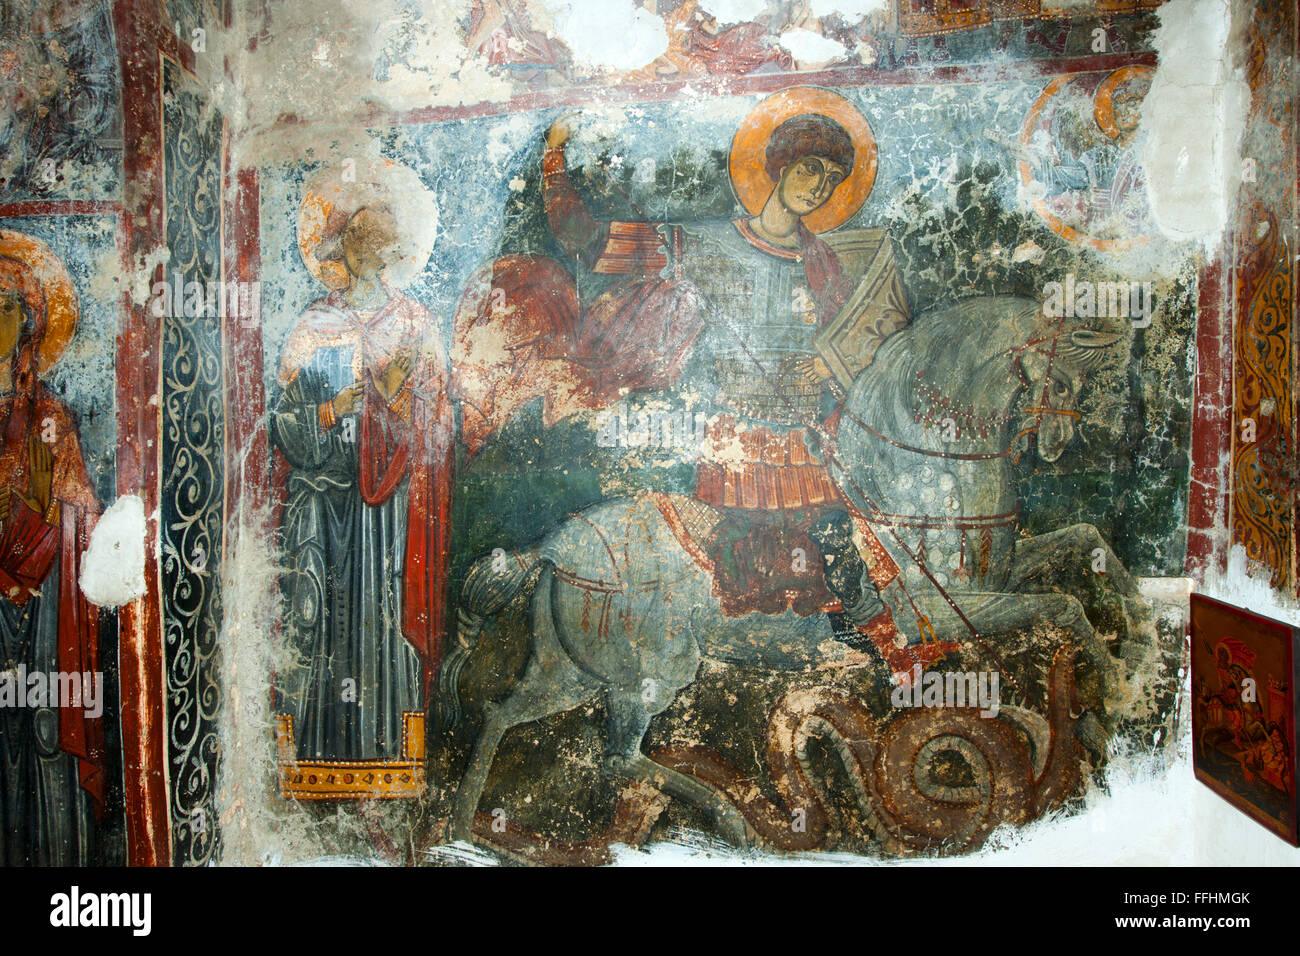 Griechenland, Kreta, Anidri bei Paleochora, Fresken in der Friedhofskirche Agios Georgios Stock Photo